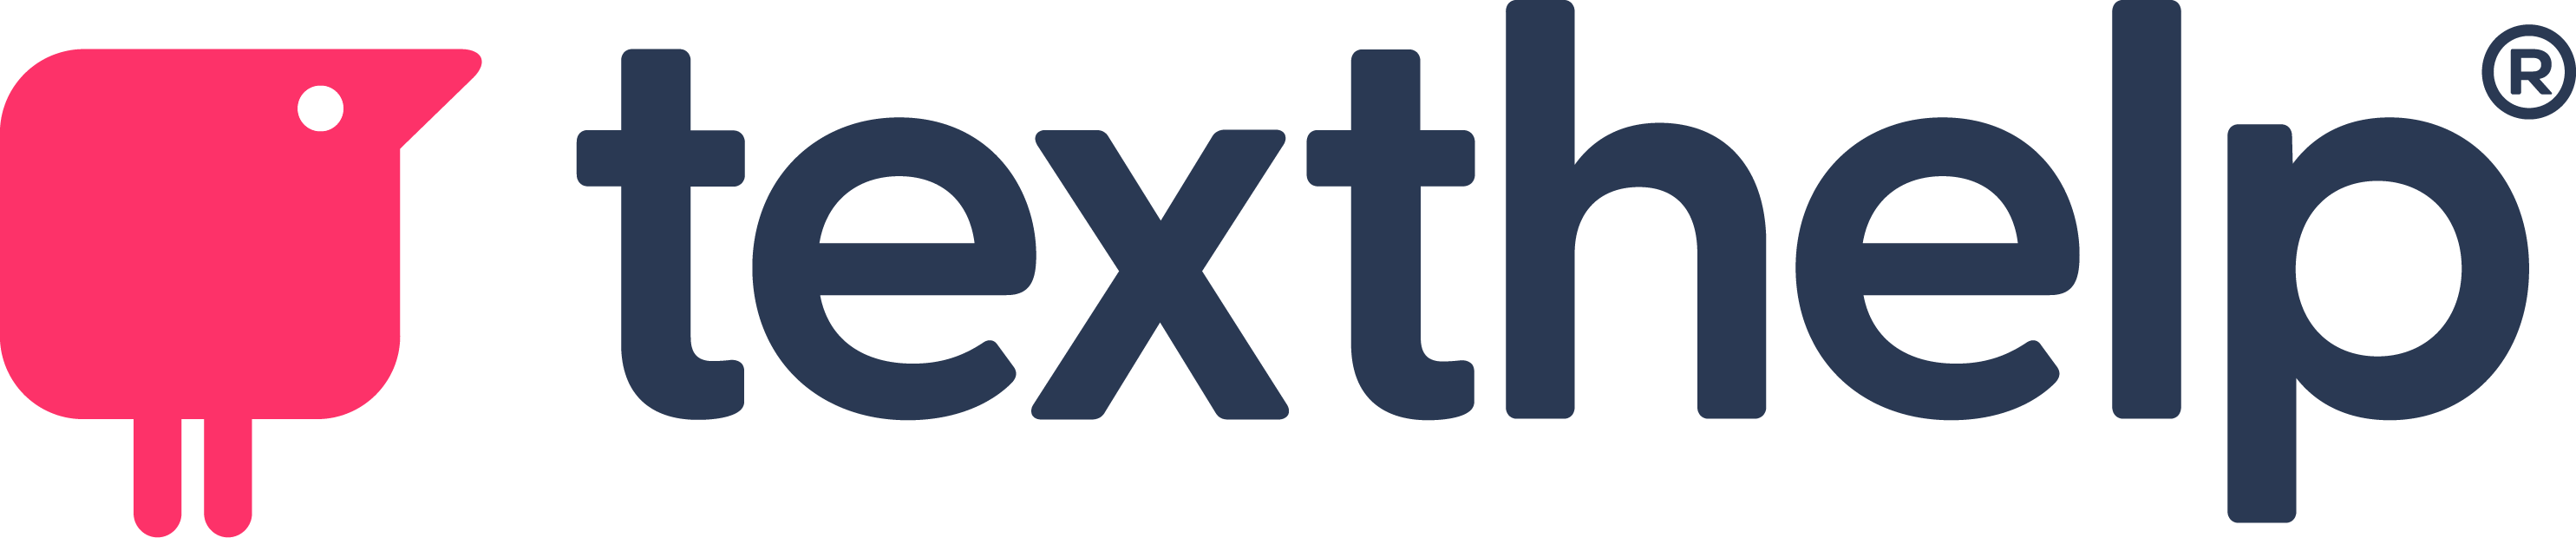 TextHelp logo - including pink animal icon